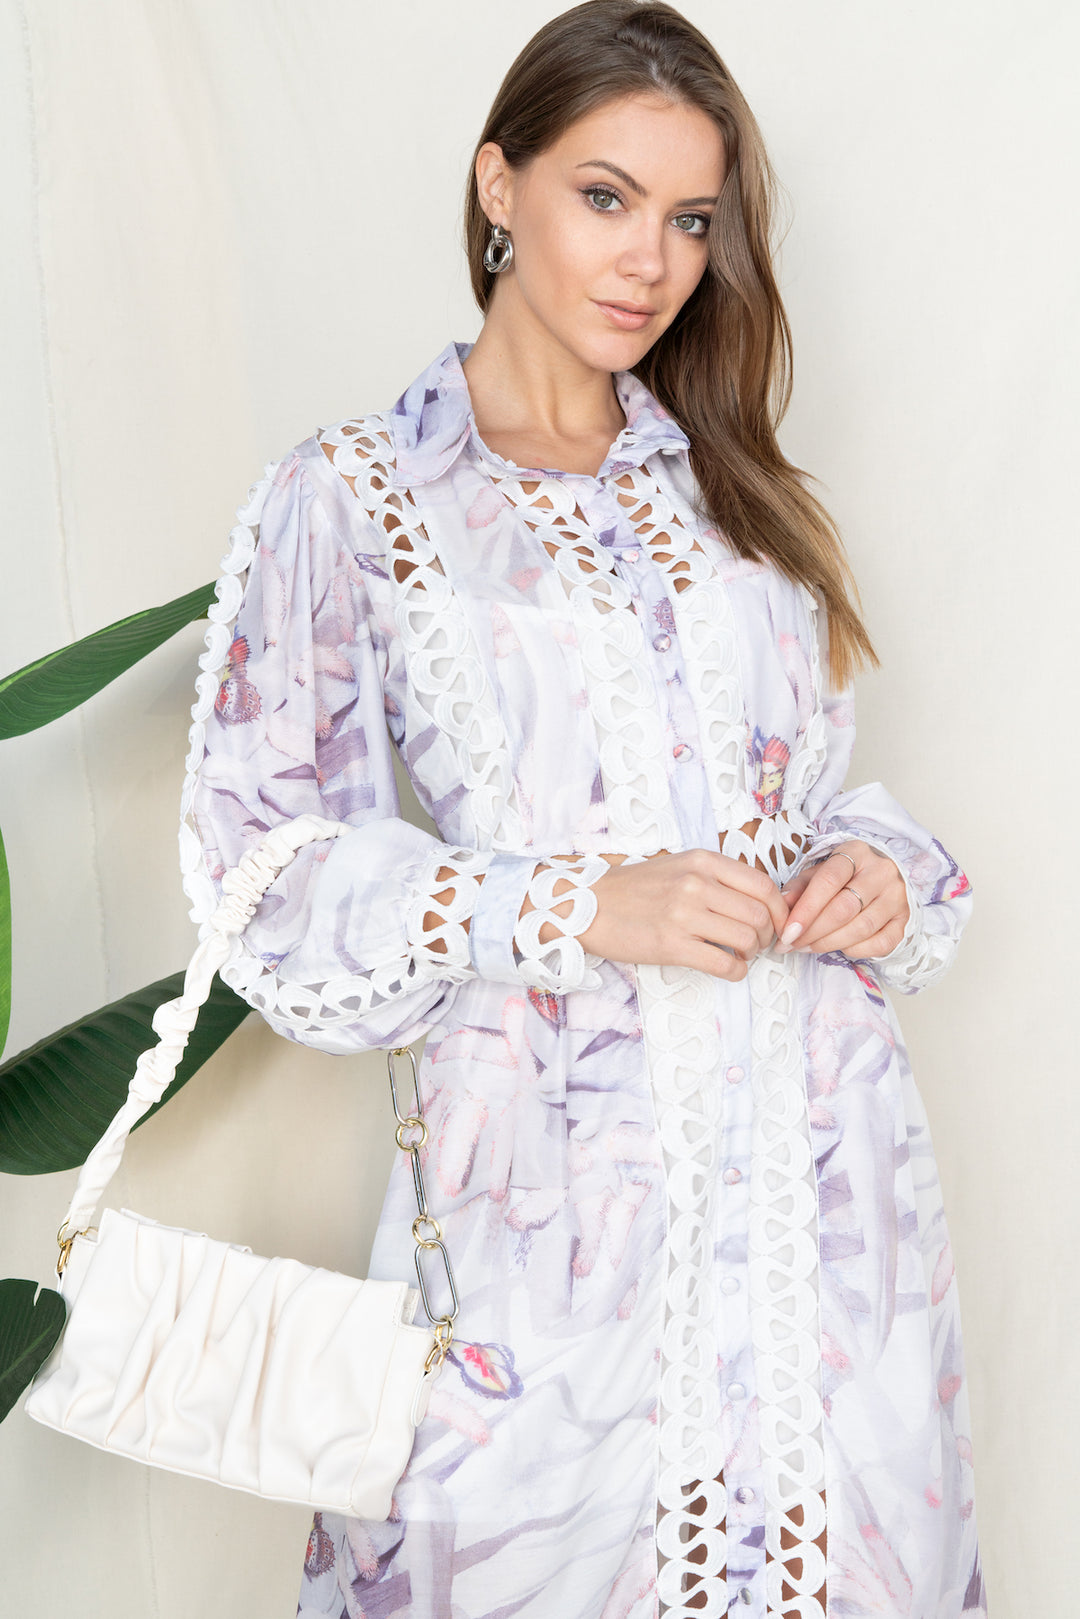 Capri Soft Floral Printed Lace Mix Dress